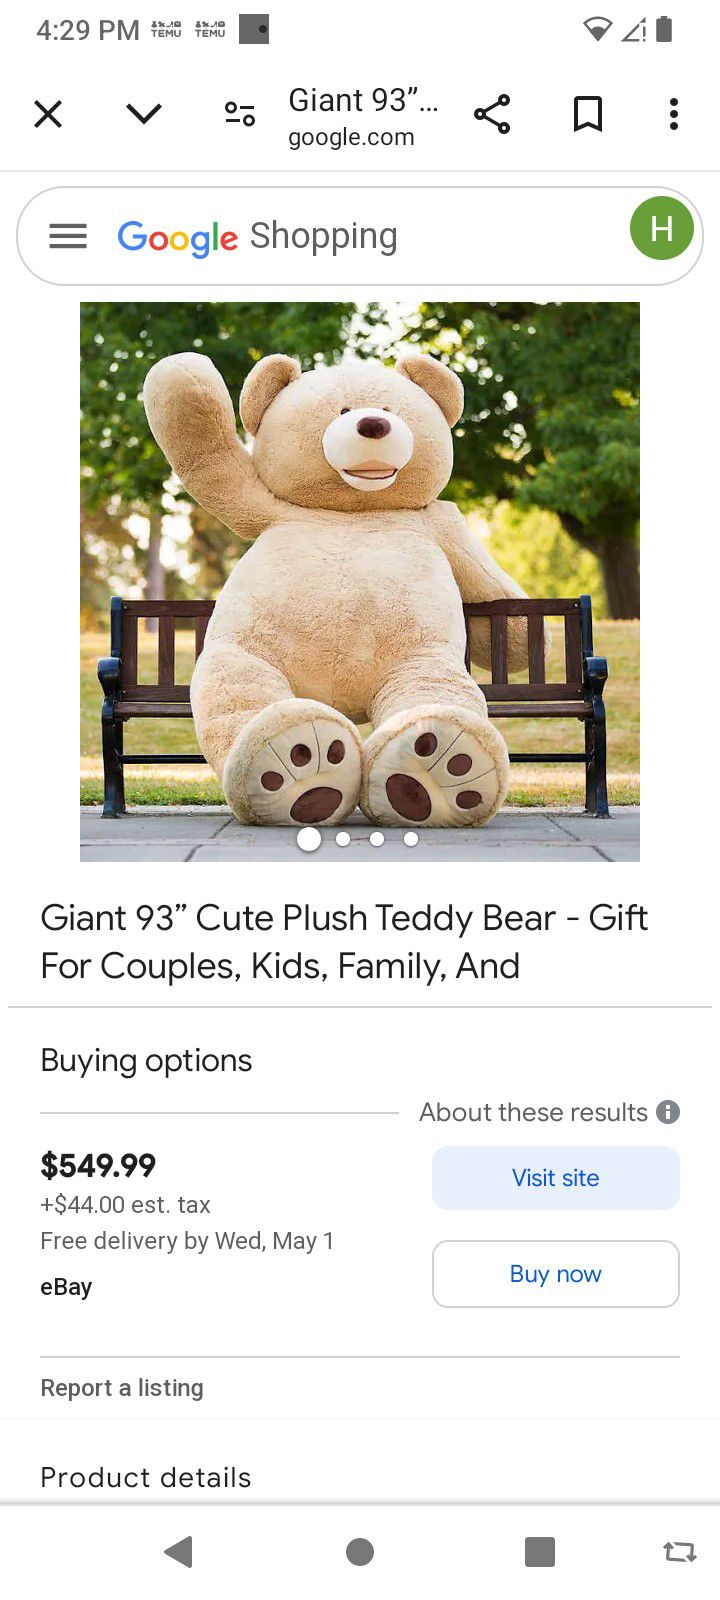 Teddy Bear 93 Fleet  Need New Friend  Need To Go My Kids Want Go To Disney World My Kids Crying Didn't Go To Disney World